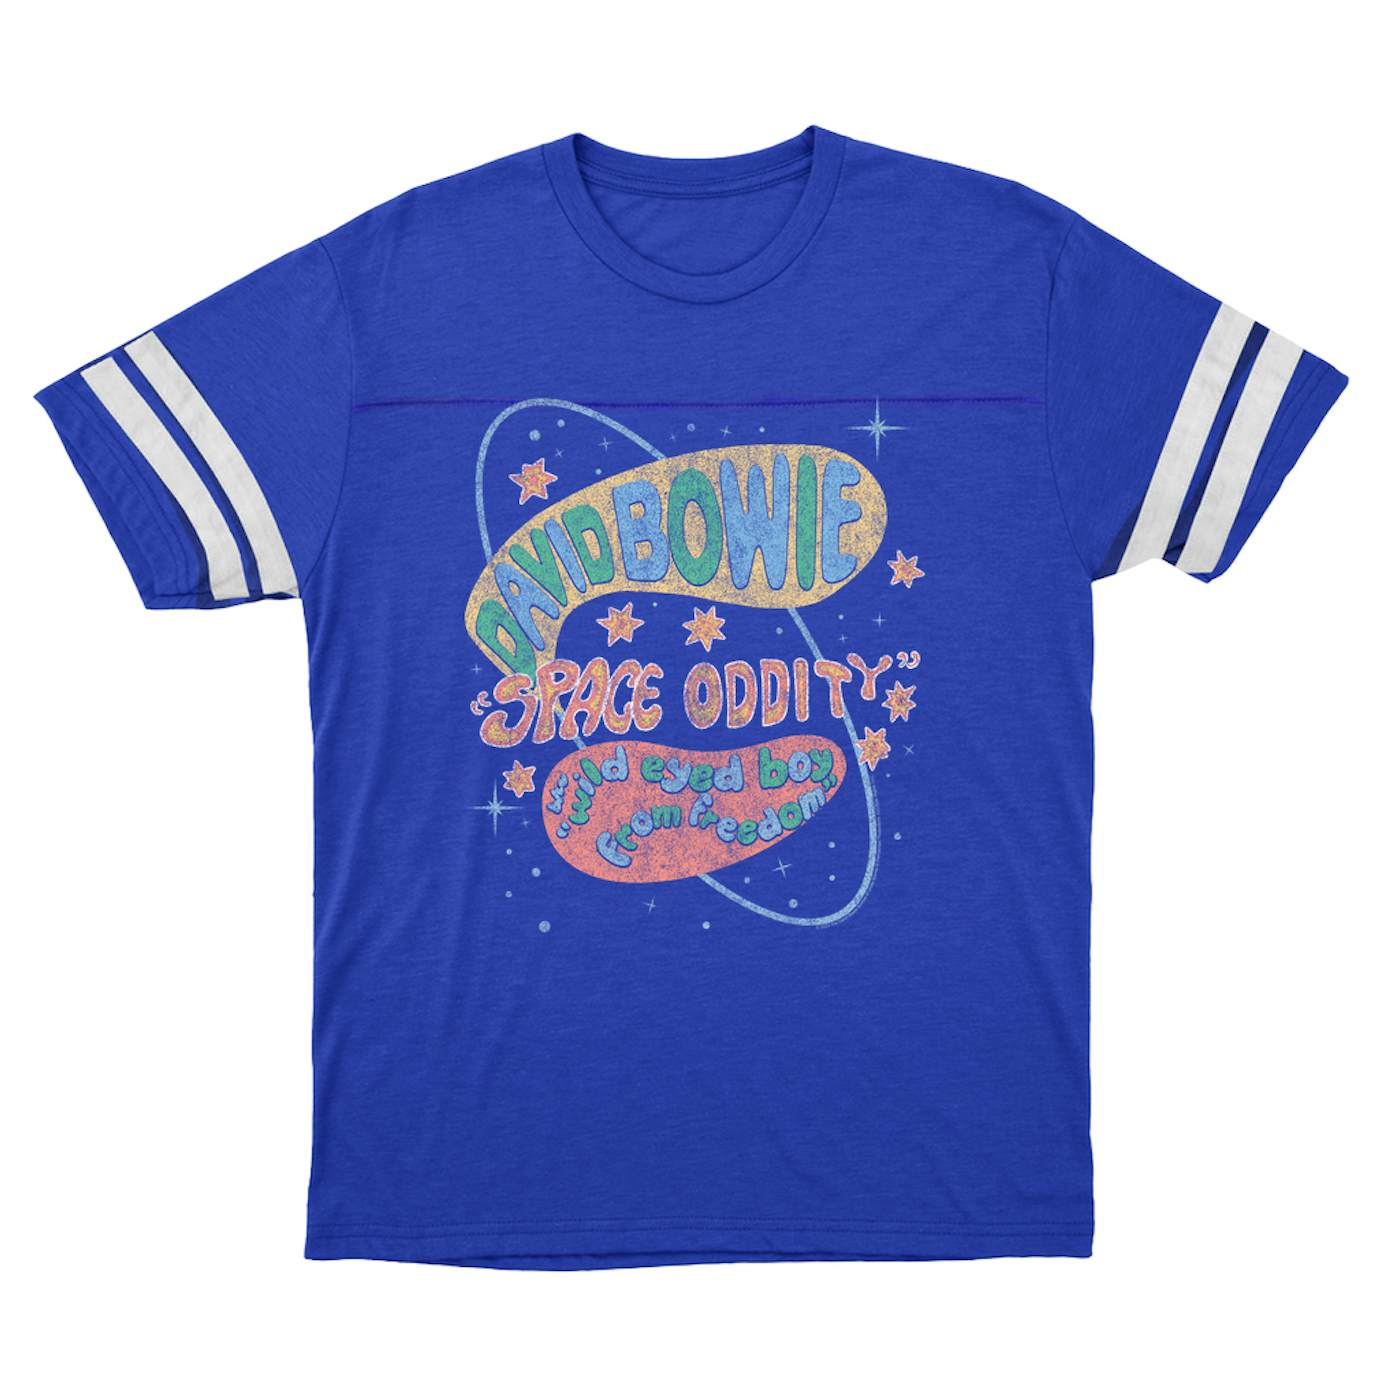 David Bowie T-Shirt | Pastel Space Oddity Distressed David Bowie Football Shirt